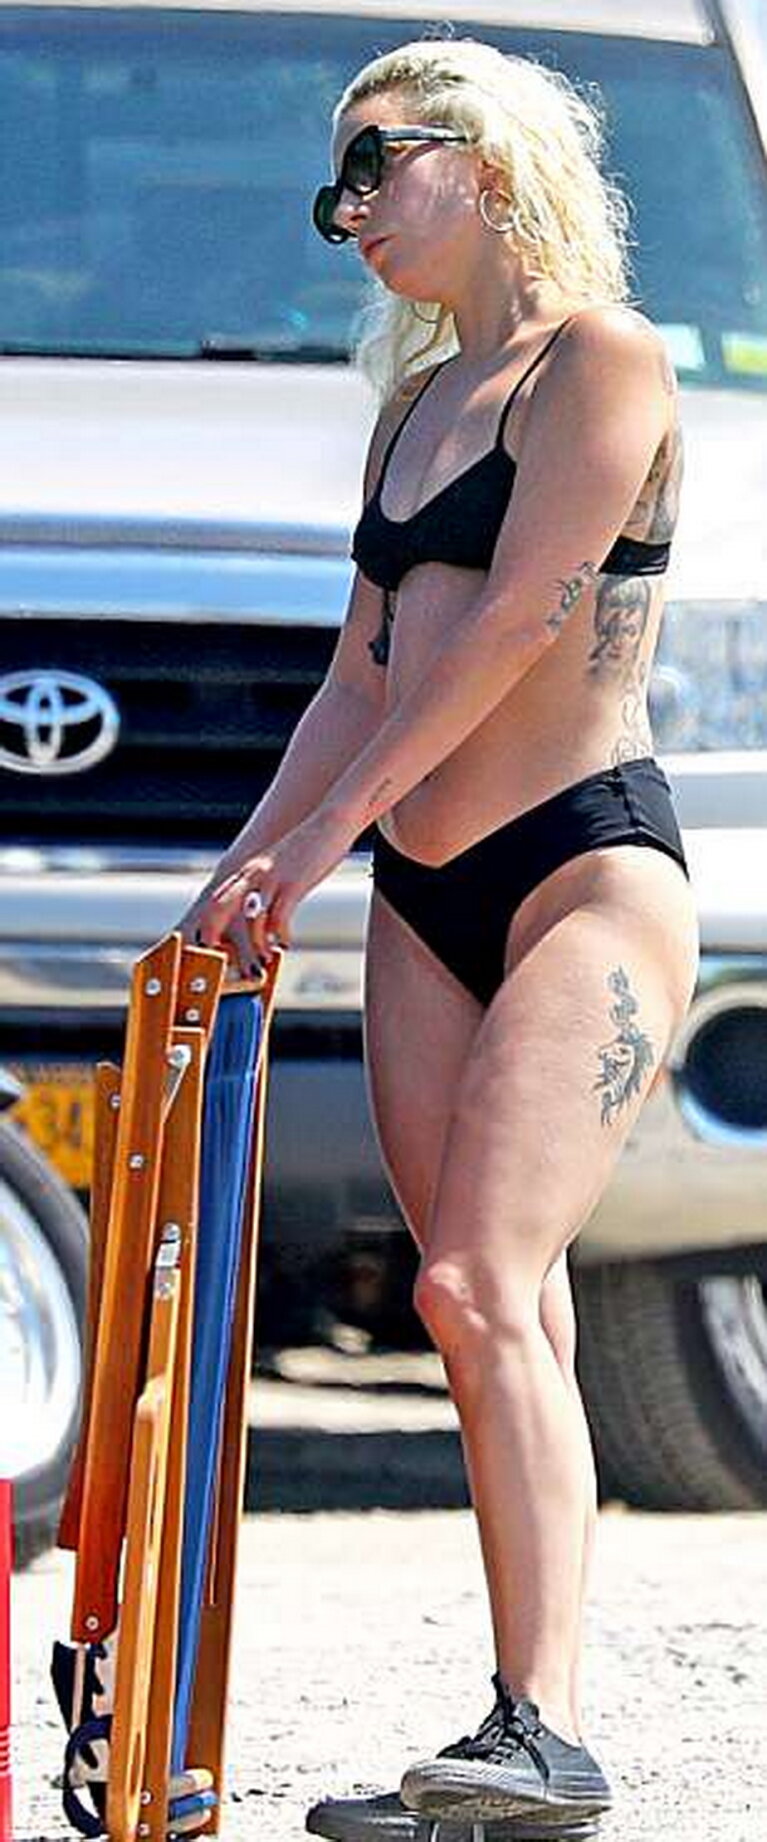 Poza 6 - GALERIE FOTO Lady Gaga, la proba costumului de baie. 